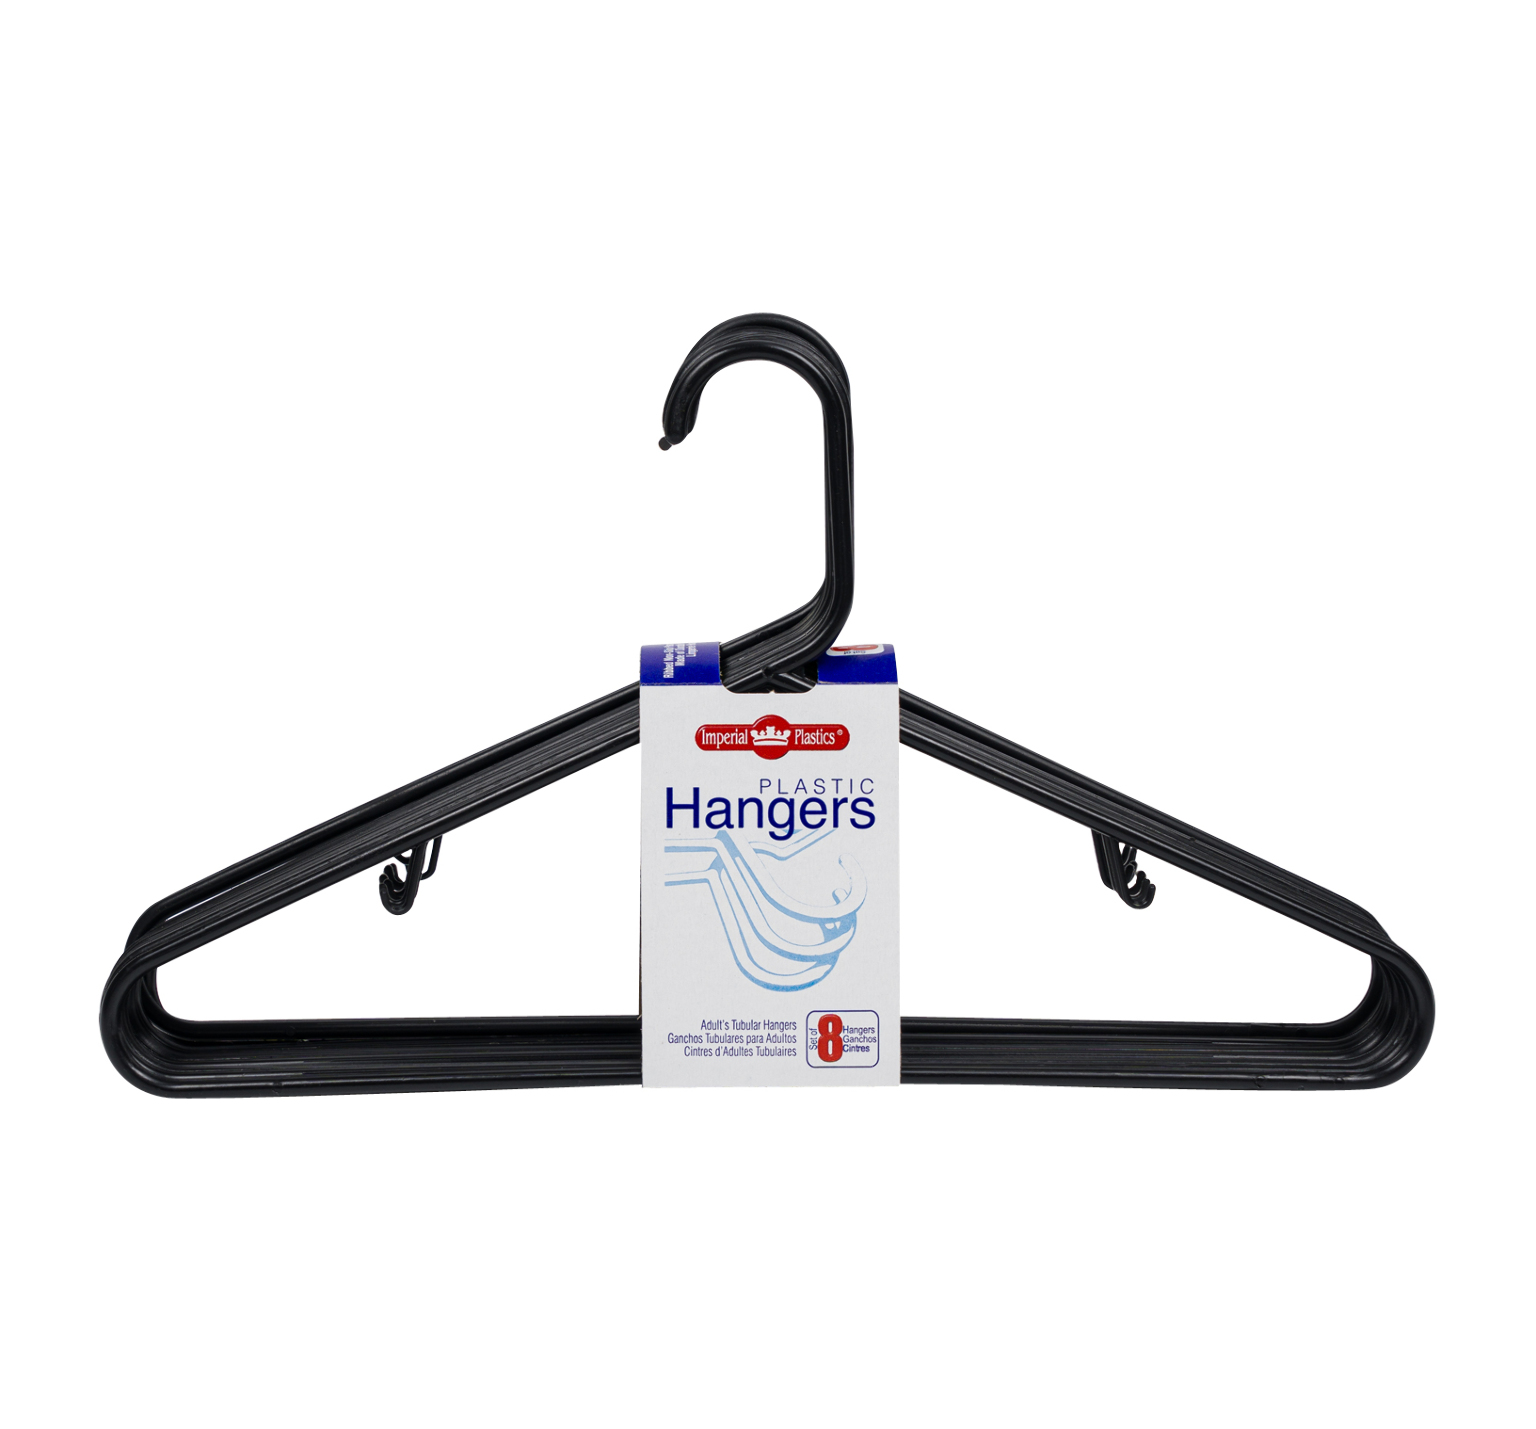 Wholesale Plastic Clothes Hangers - Assorted 8 Packs - Bulk Hangers